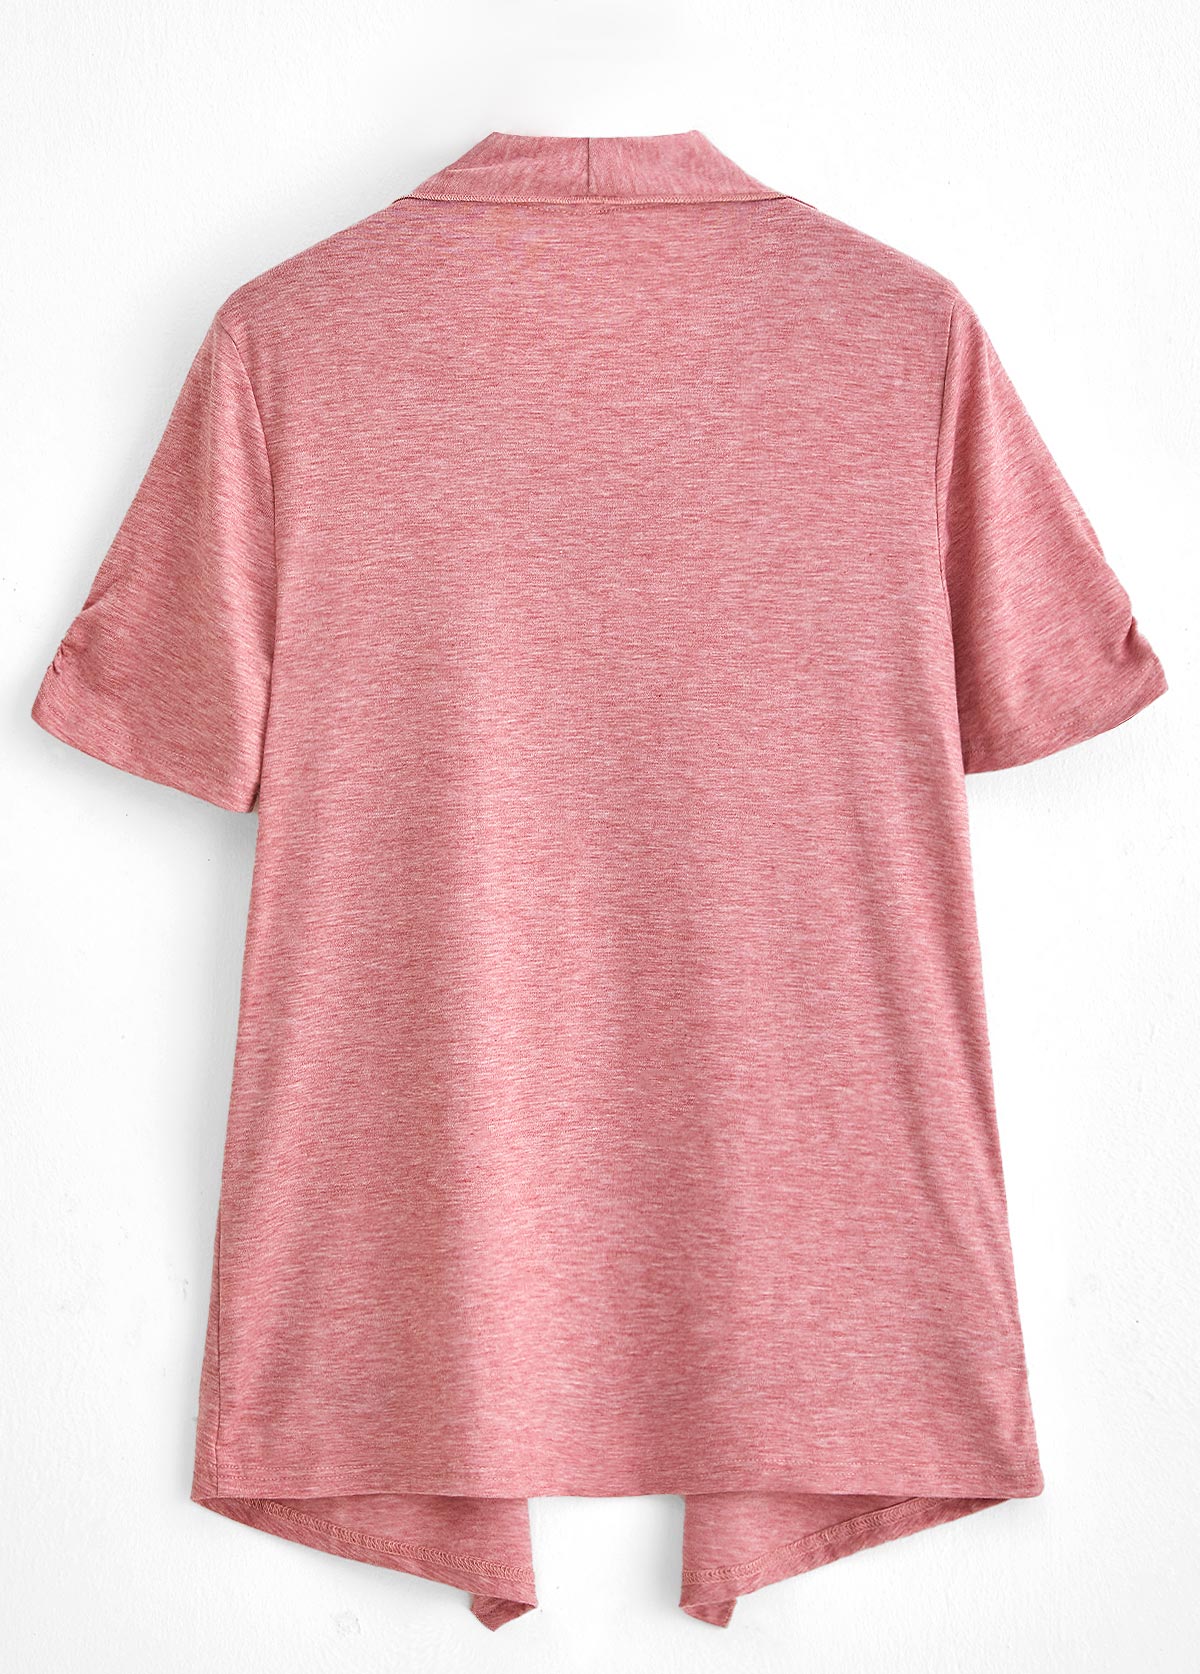 Random Floral Print Fake 2in1 Pink T Shirt